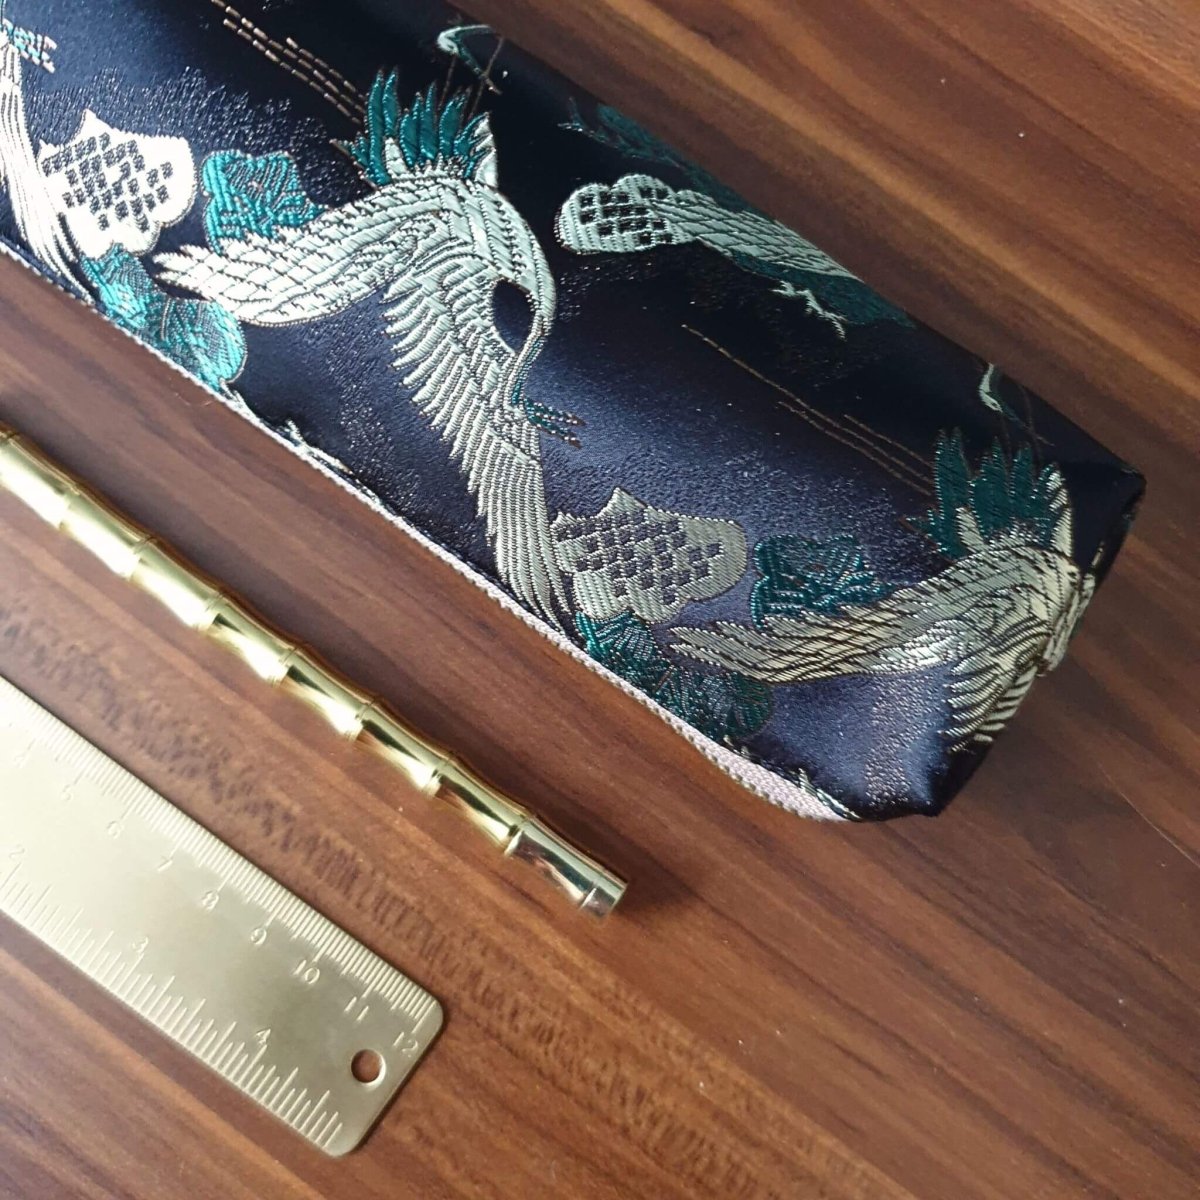 crane design pencil case with brass stationery on desk